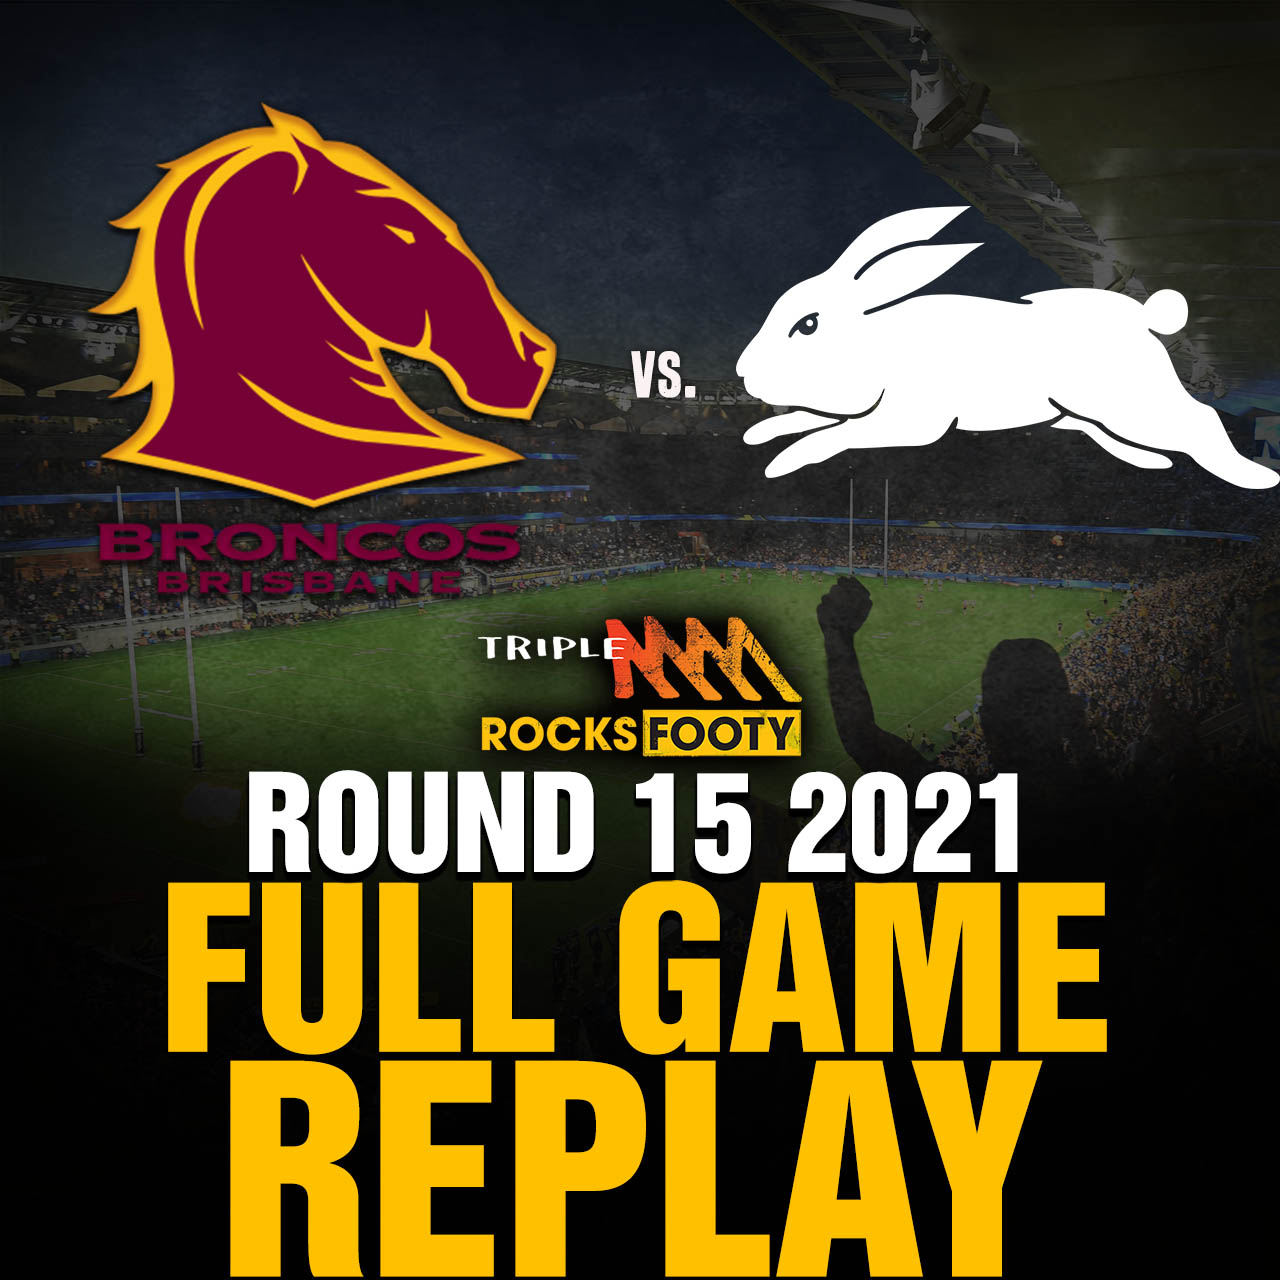 FULL GAME REPLAY | Brisbane Broncos vs. South Sydney Rabbitohs